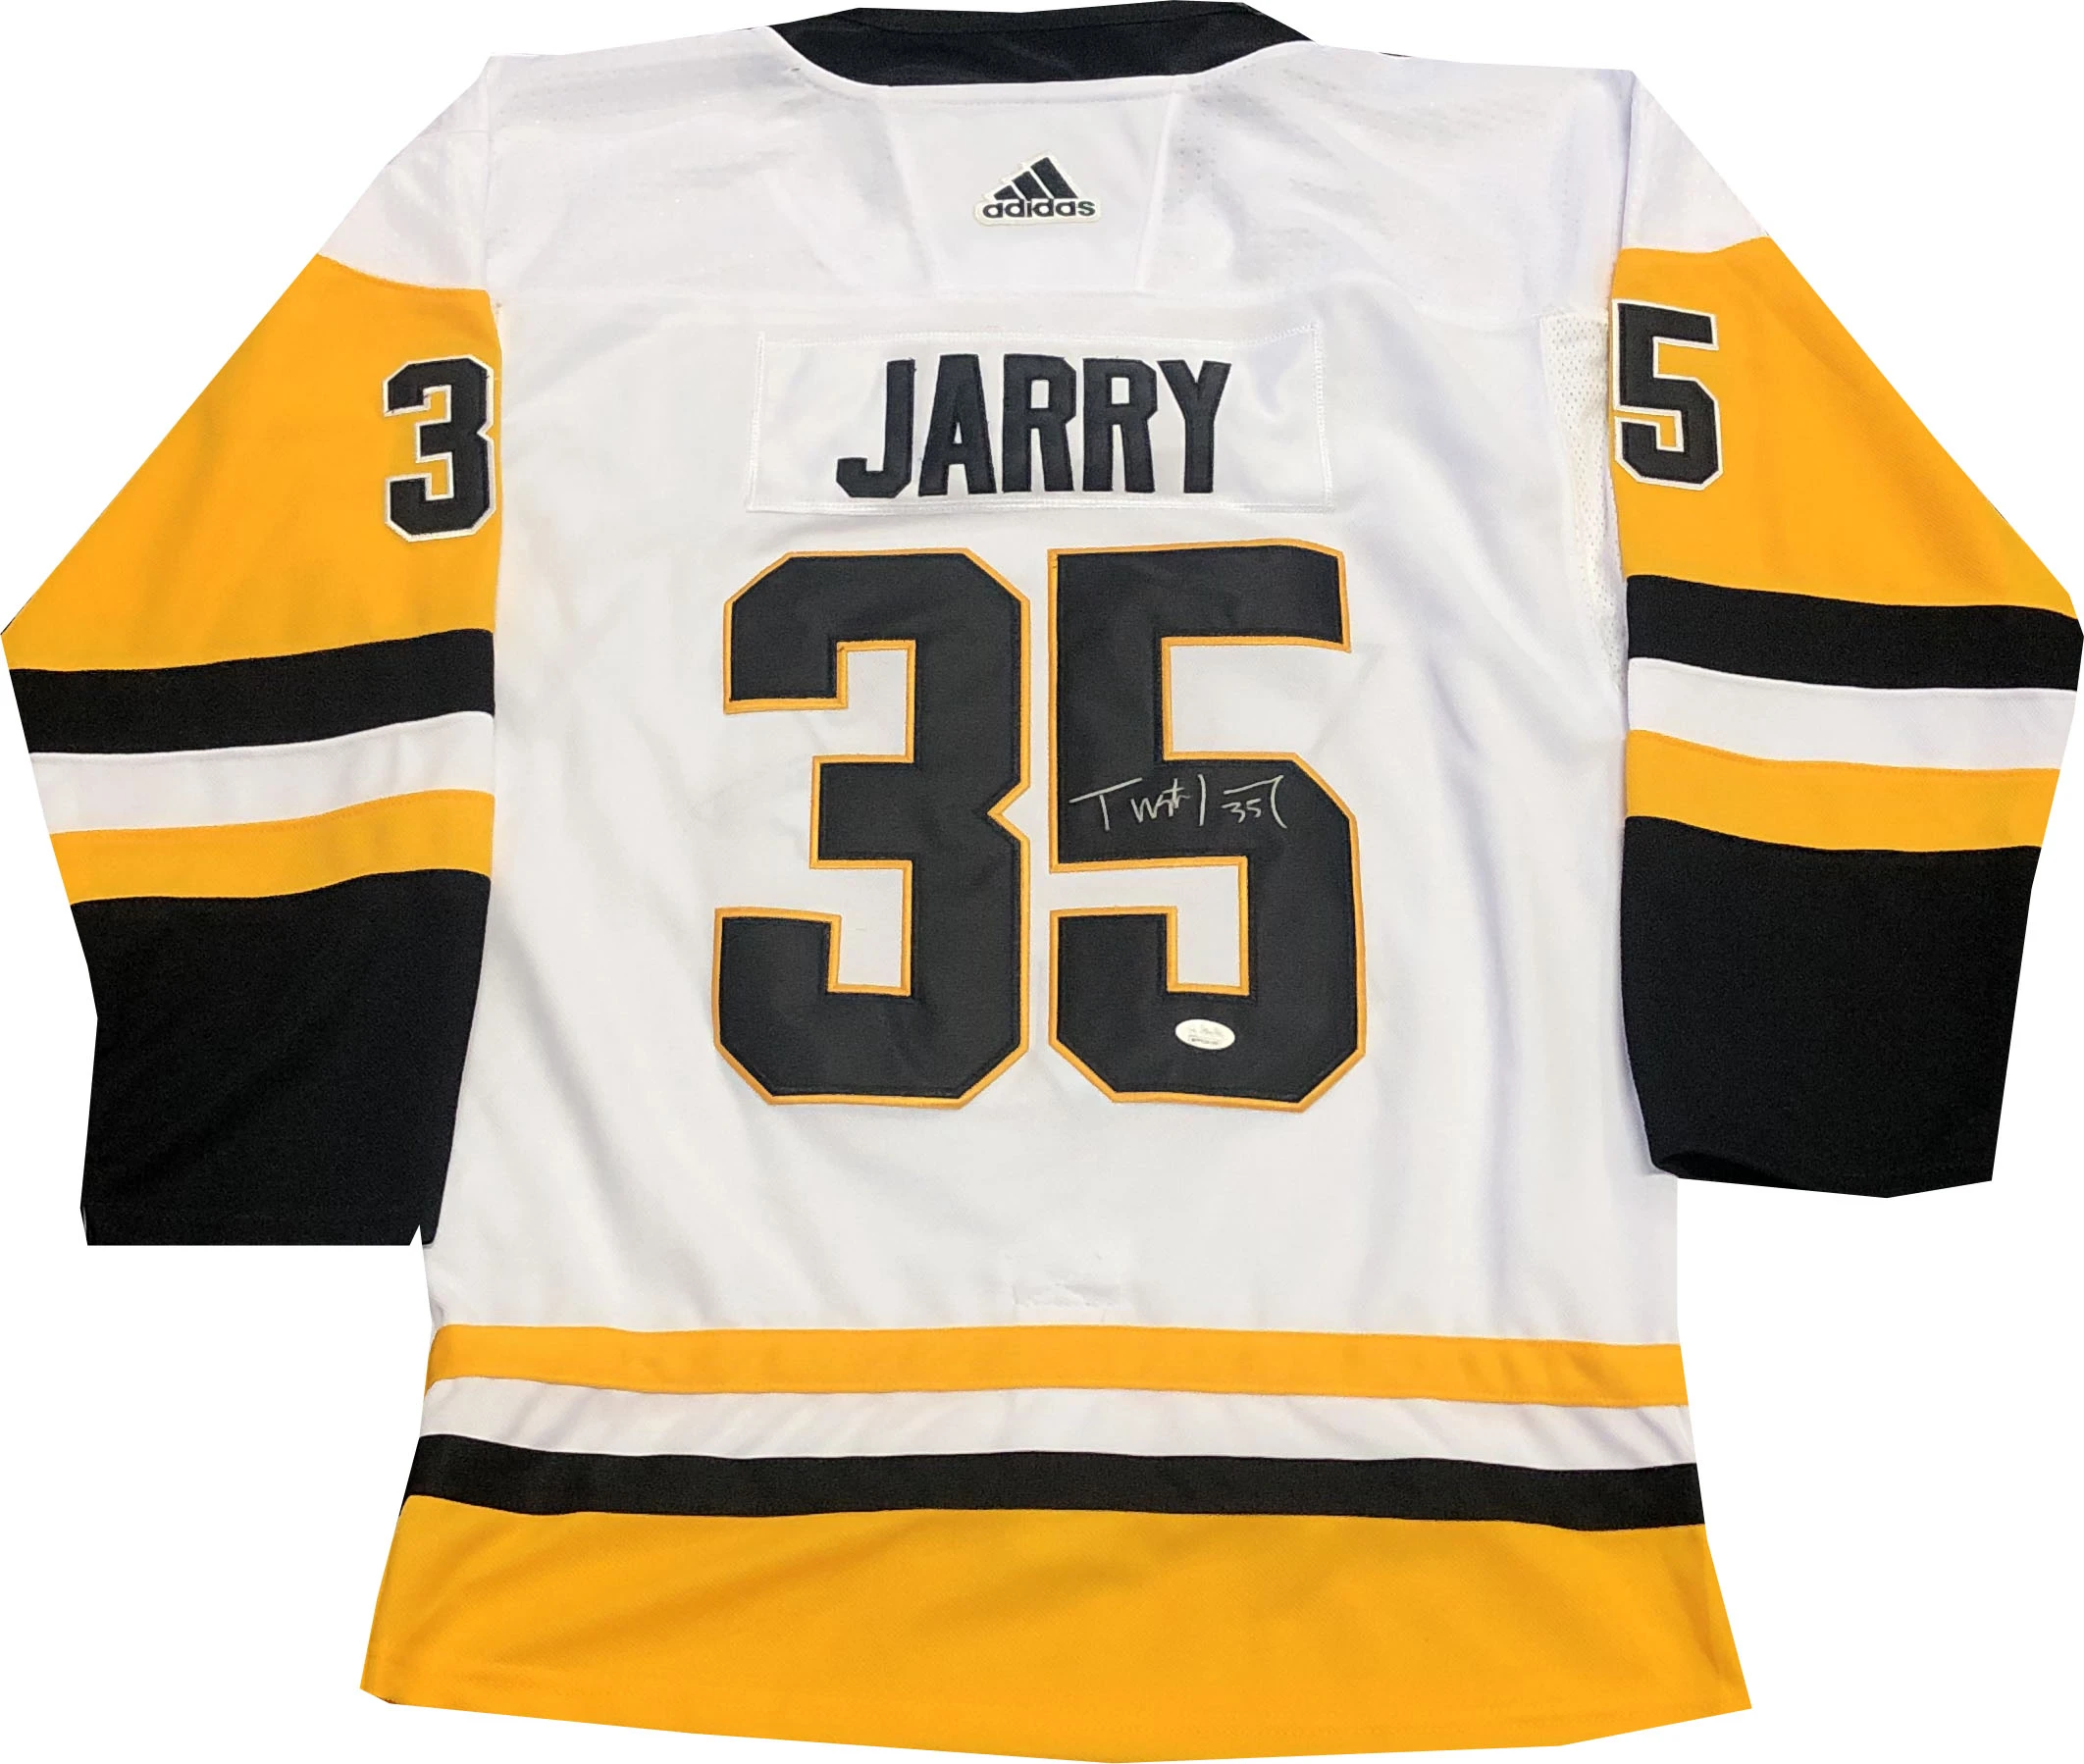 jarry jersey